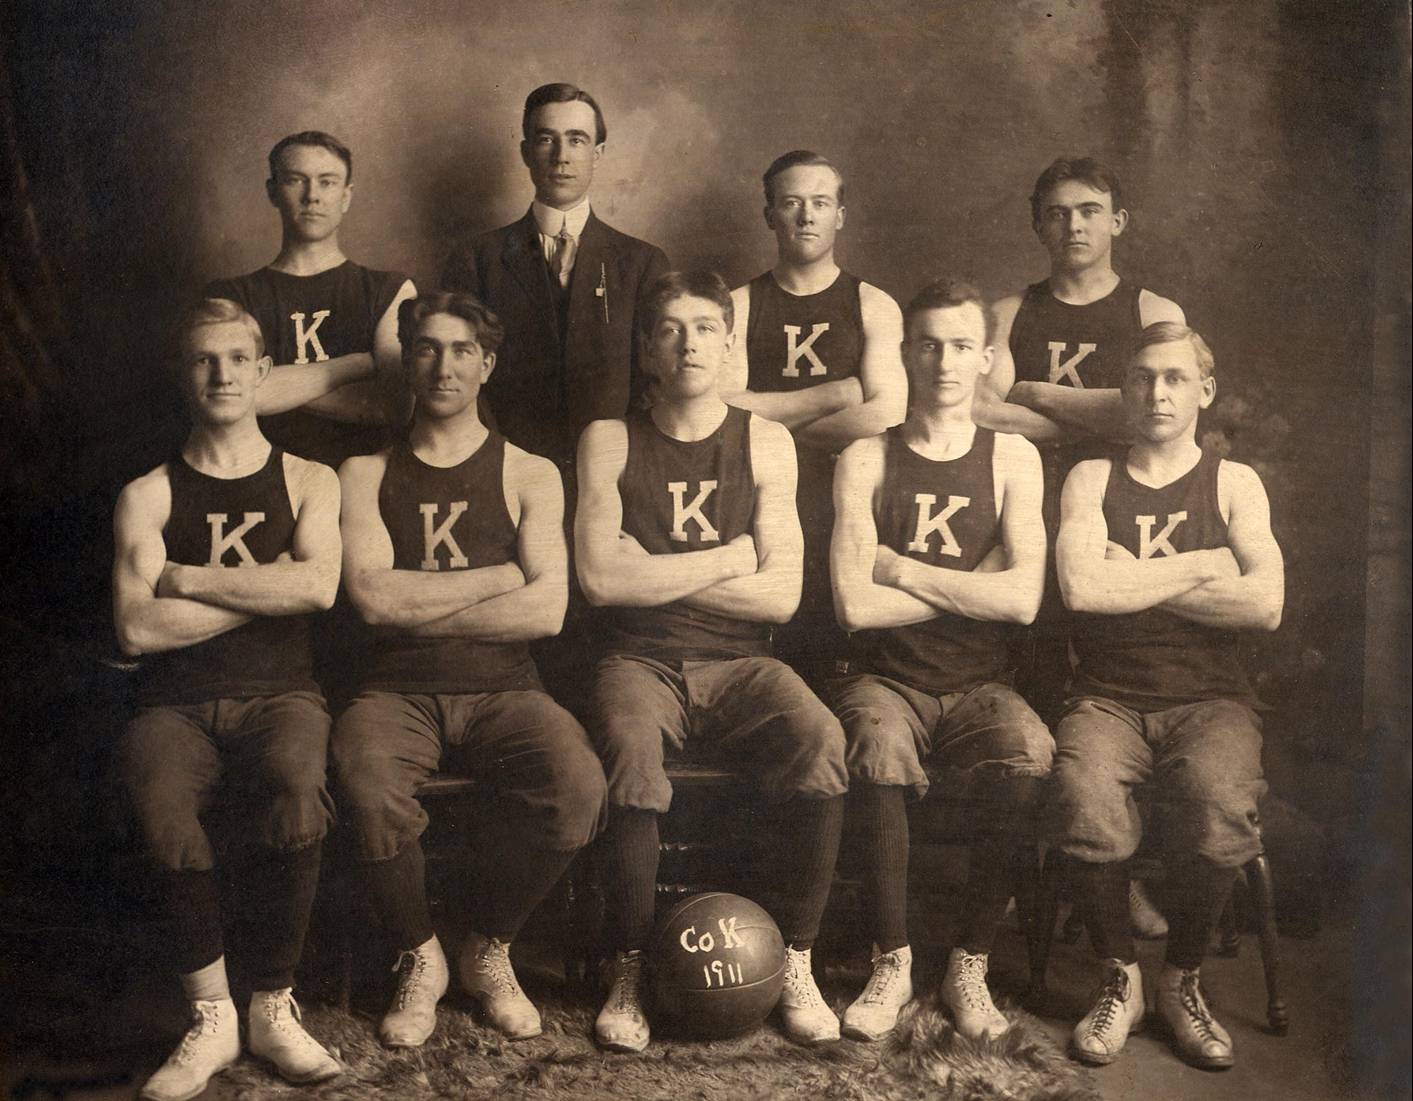 Company K basketball team from 1911.